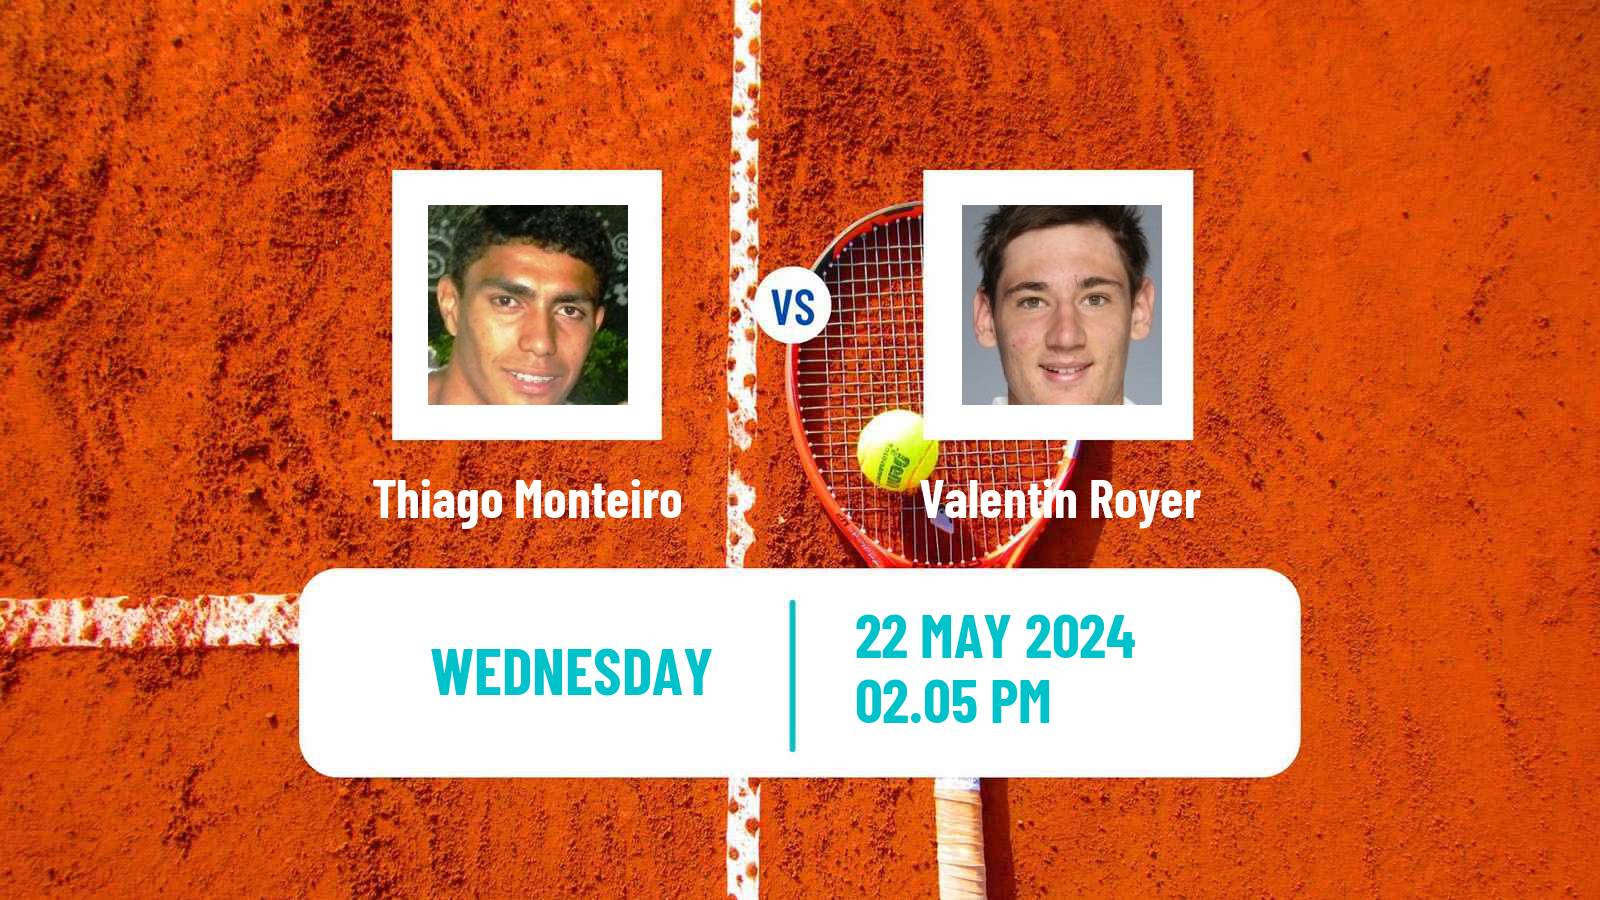 Tennis ATP Roland Garros Thiago Monteiro - Valentin Royer